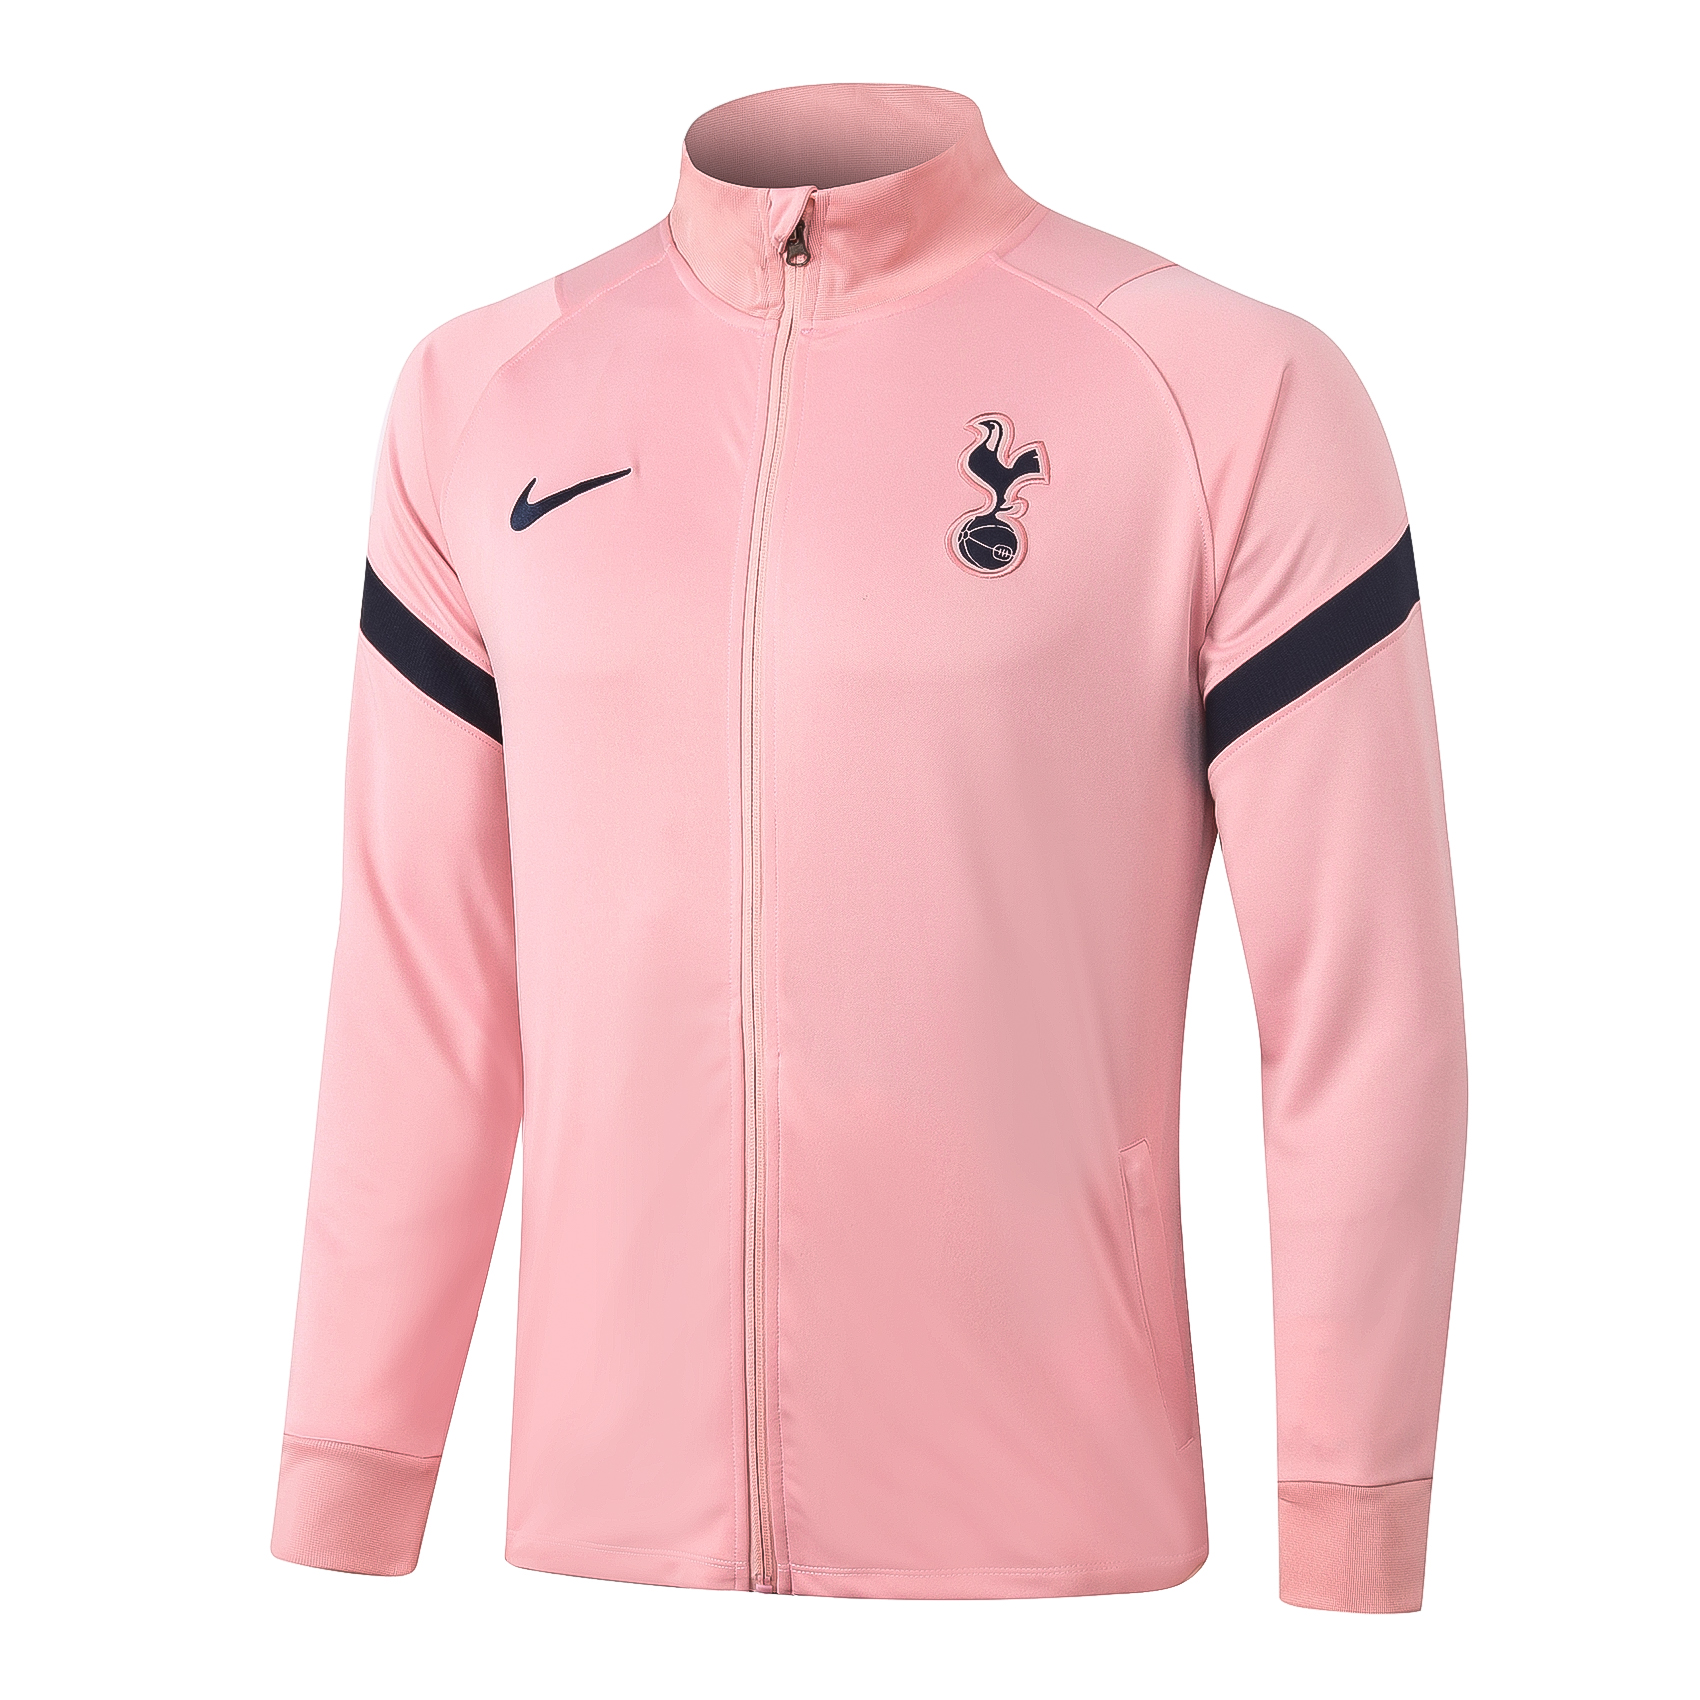 Tottenham Hotspur Tracksuit Jacket 2020 2021 – Pink